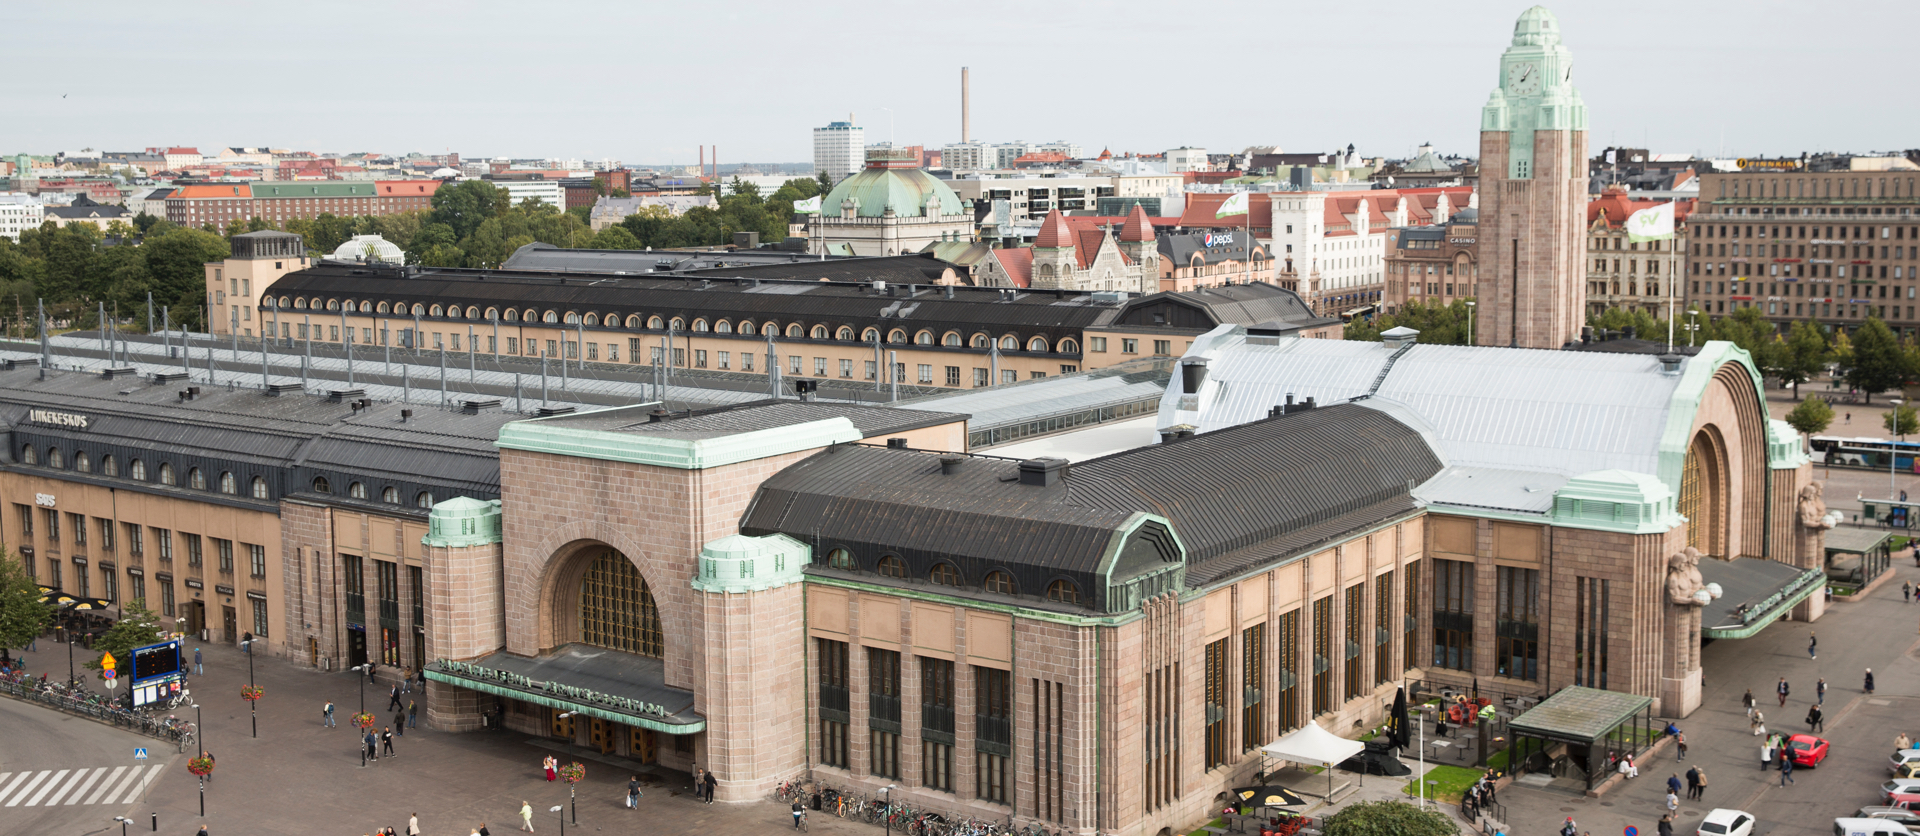 Helsinki Central railway station - VR